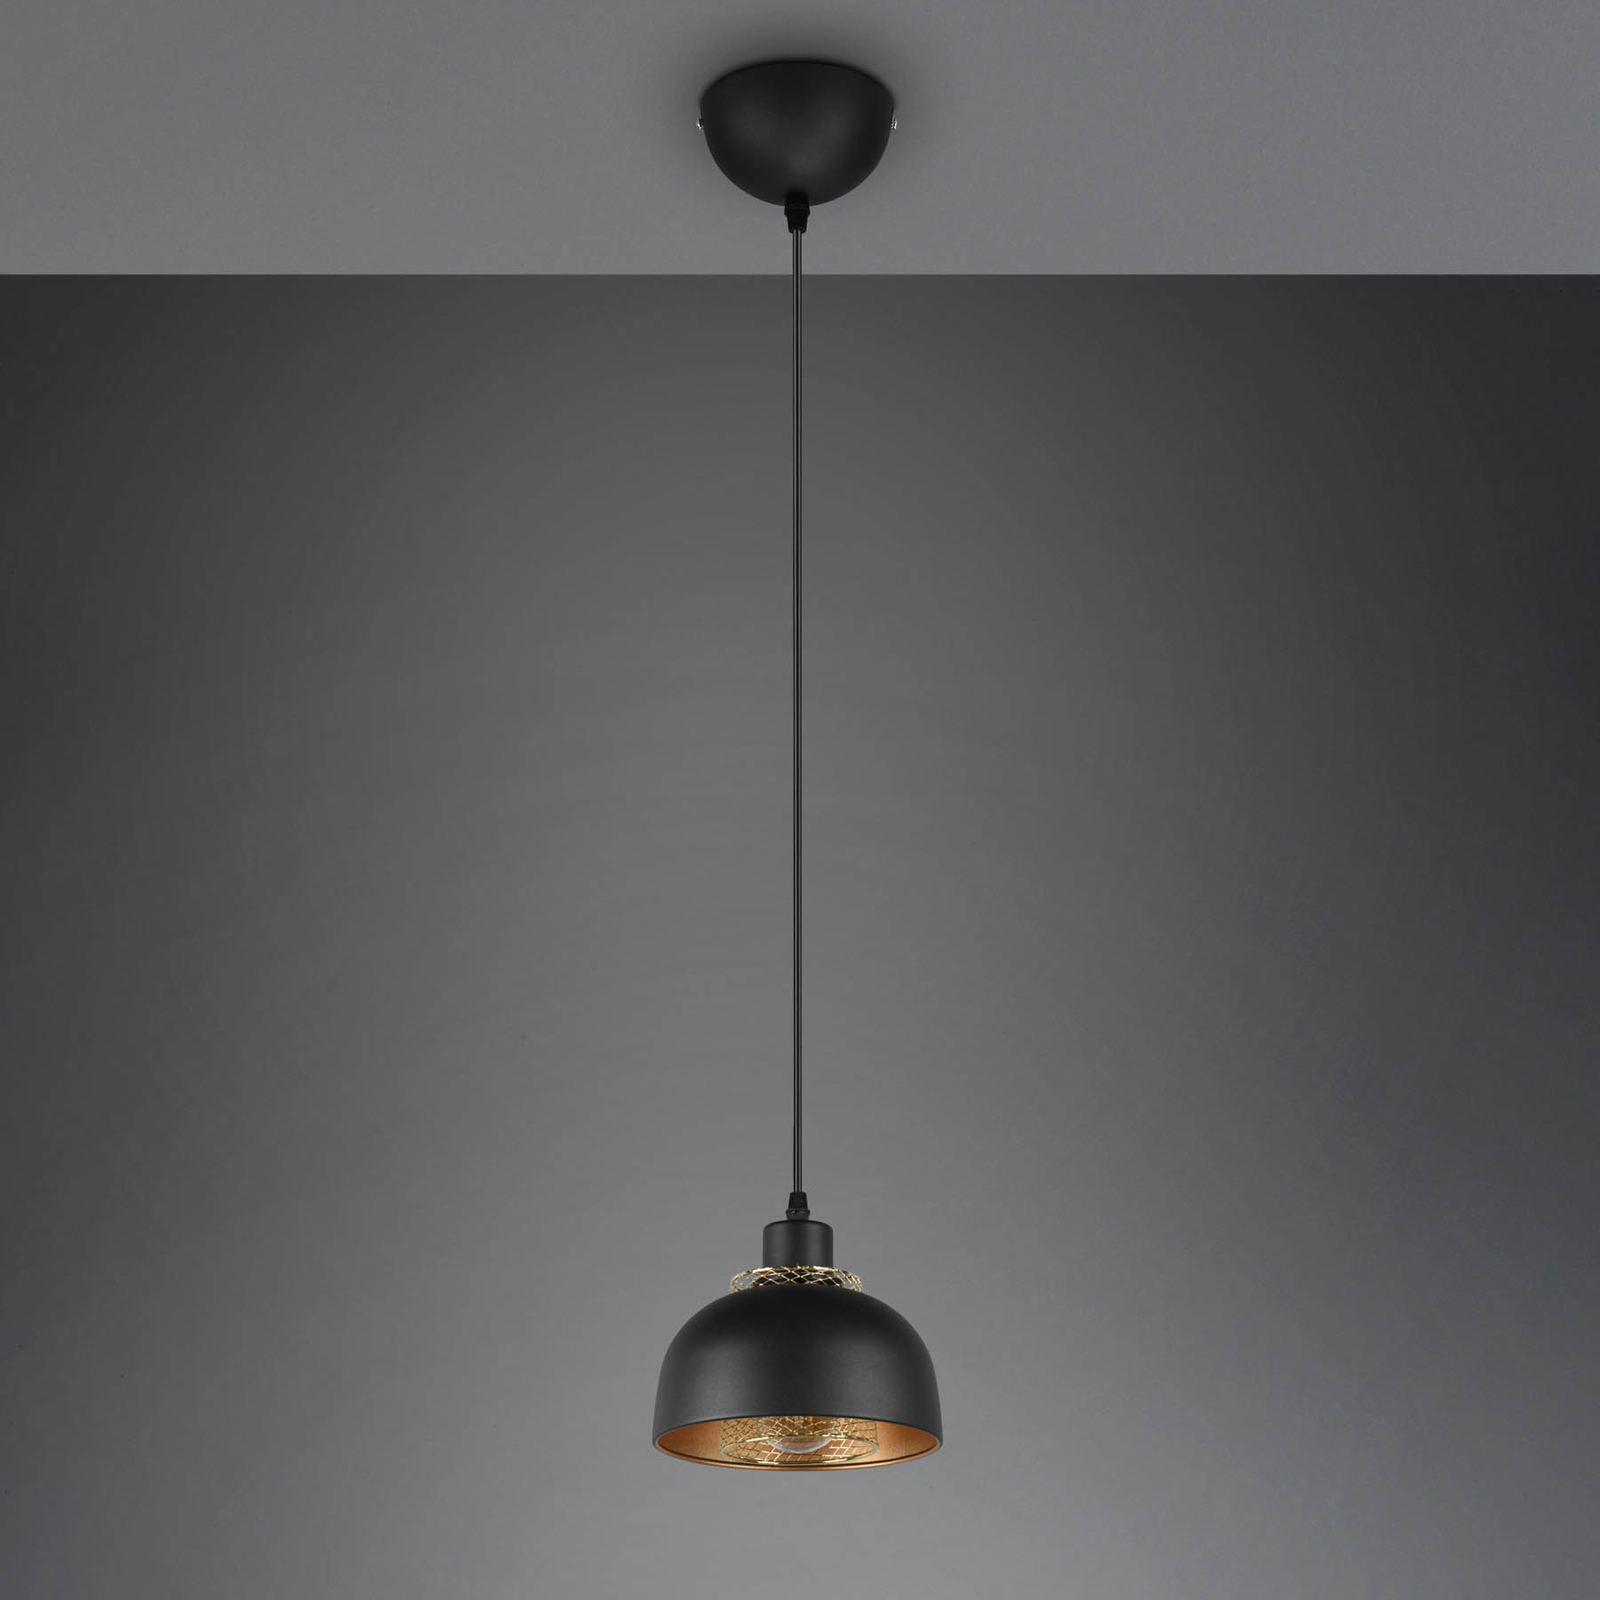 Punch hanglamp zwart/goud 1-lamp Ø 18 cm